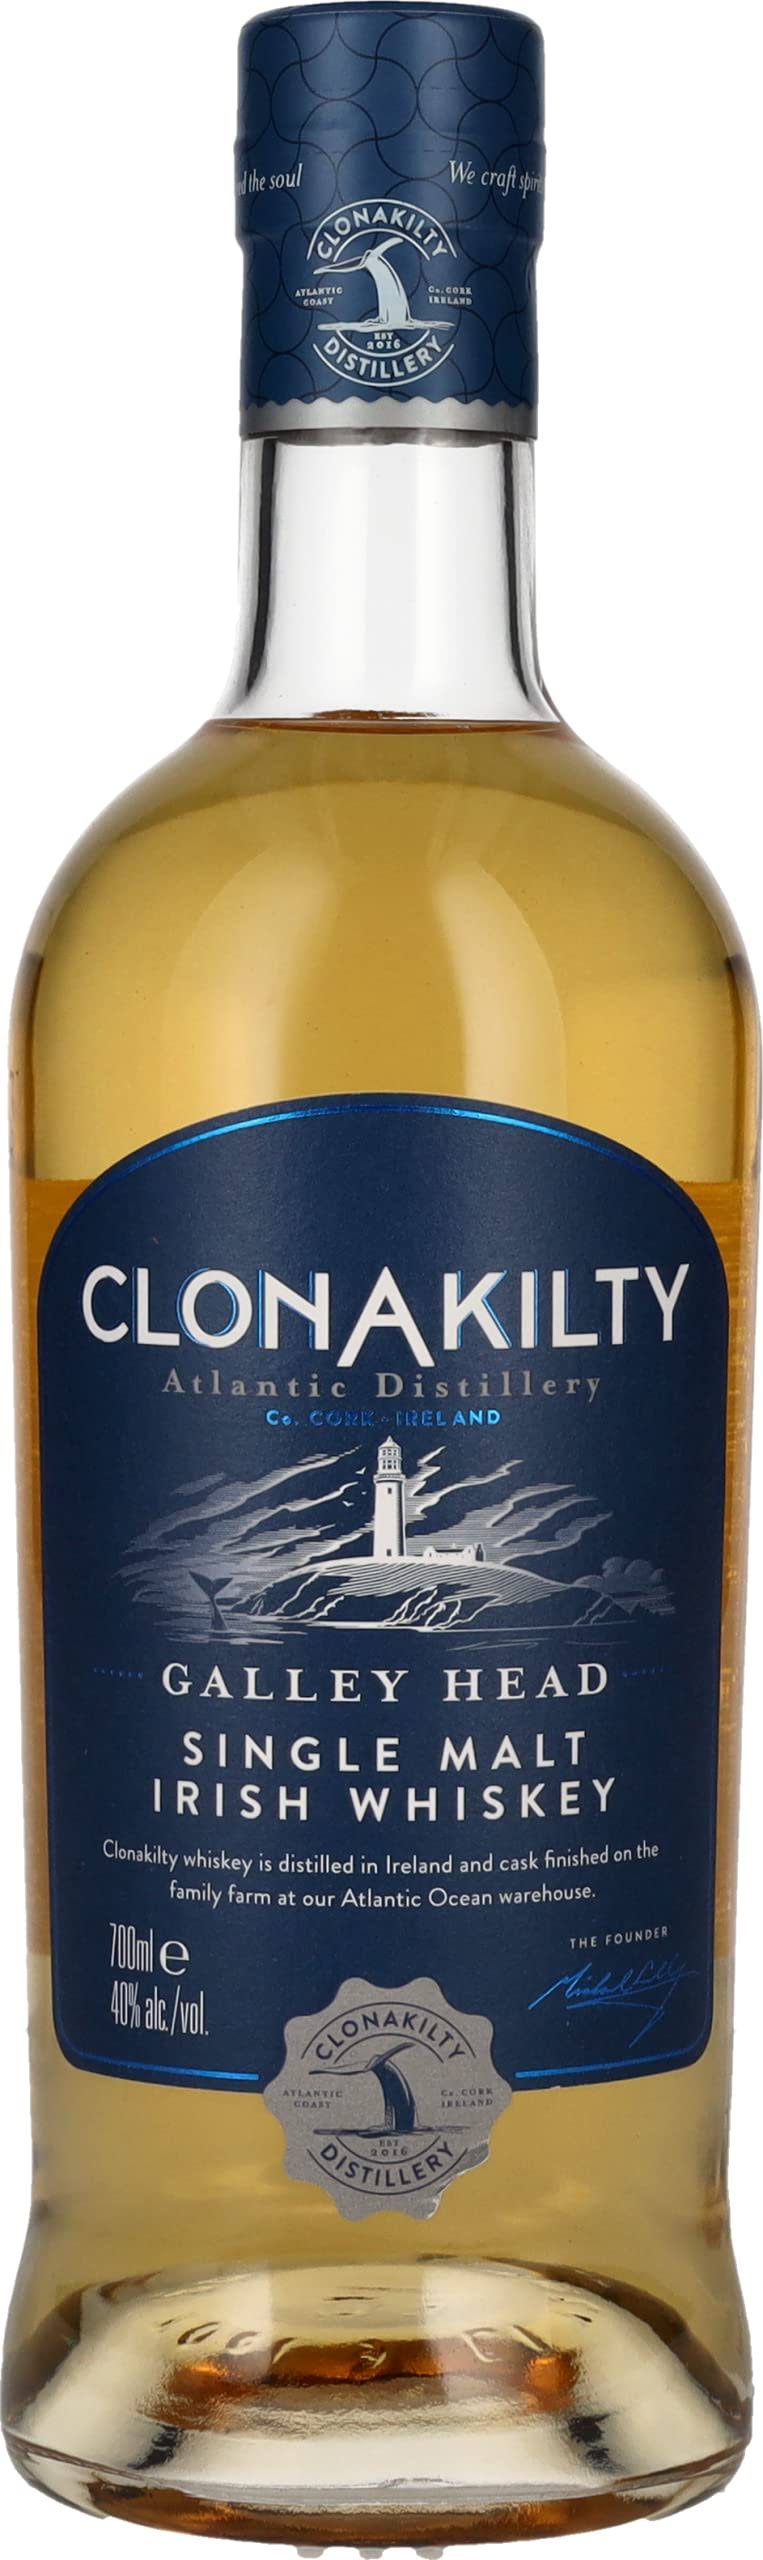 Clonakilty Galley Head Single Malt Irish Whiskey 40% Vol. 0,7L